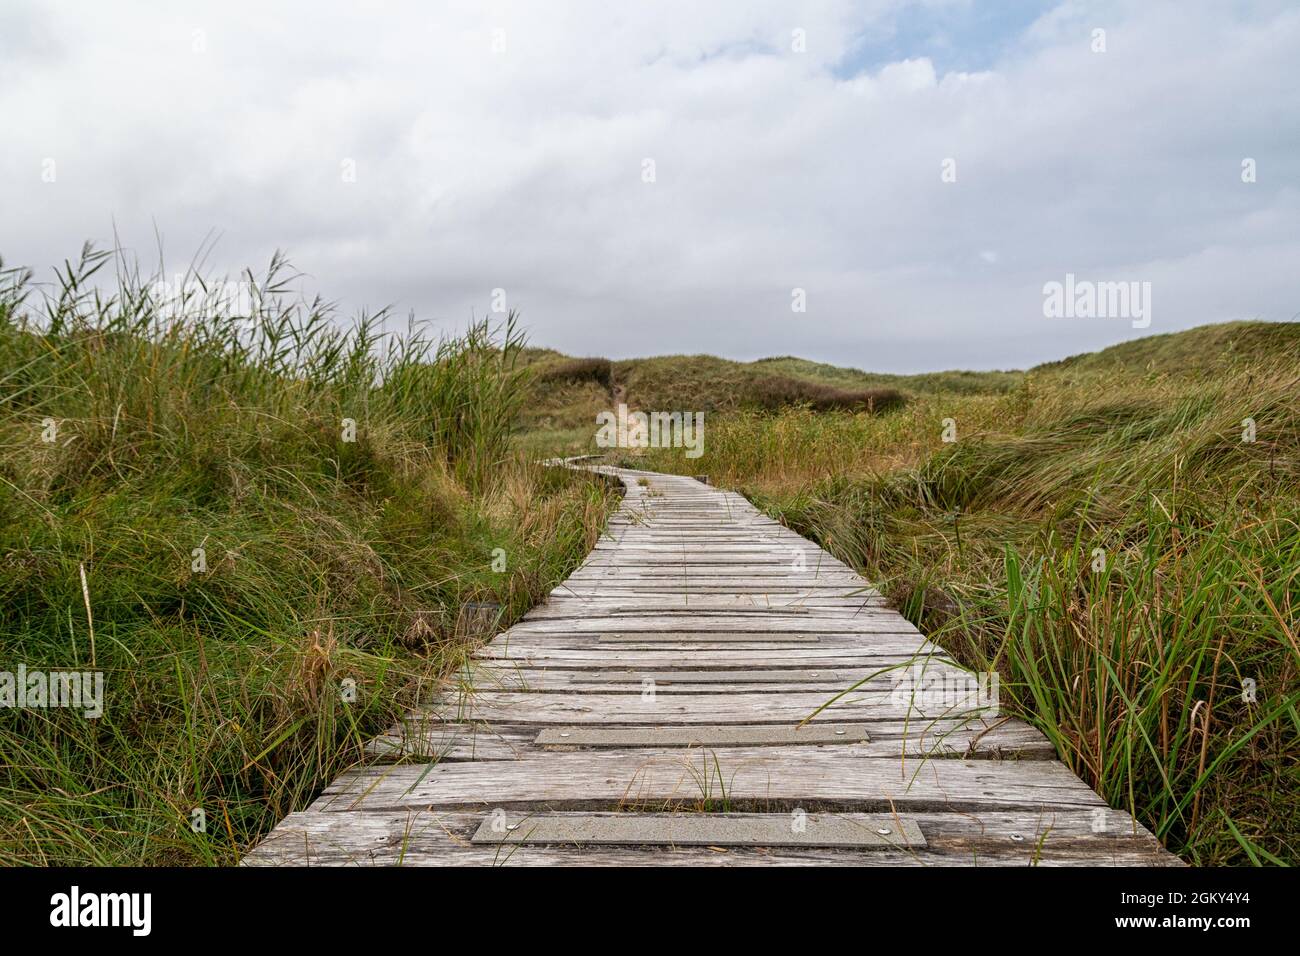 Boardwalk through the dunes in Lille Norge in Saltum in Denmark Stock Photo